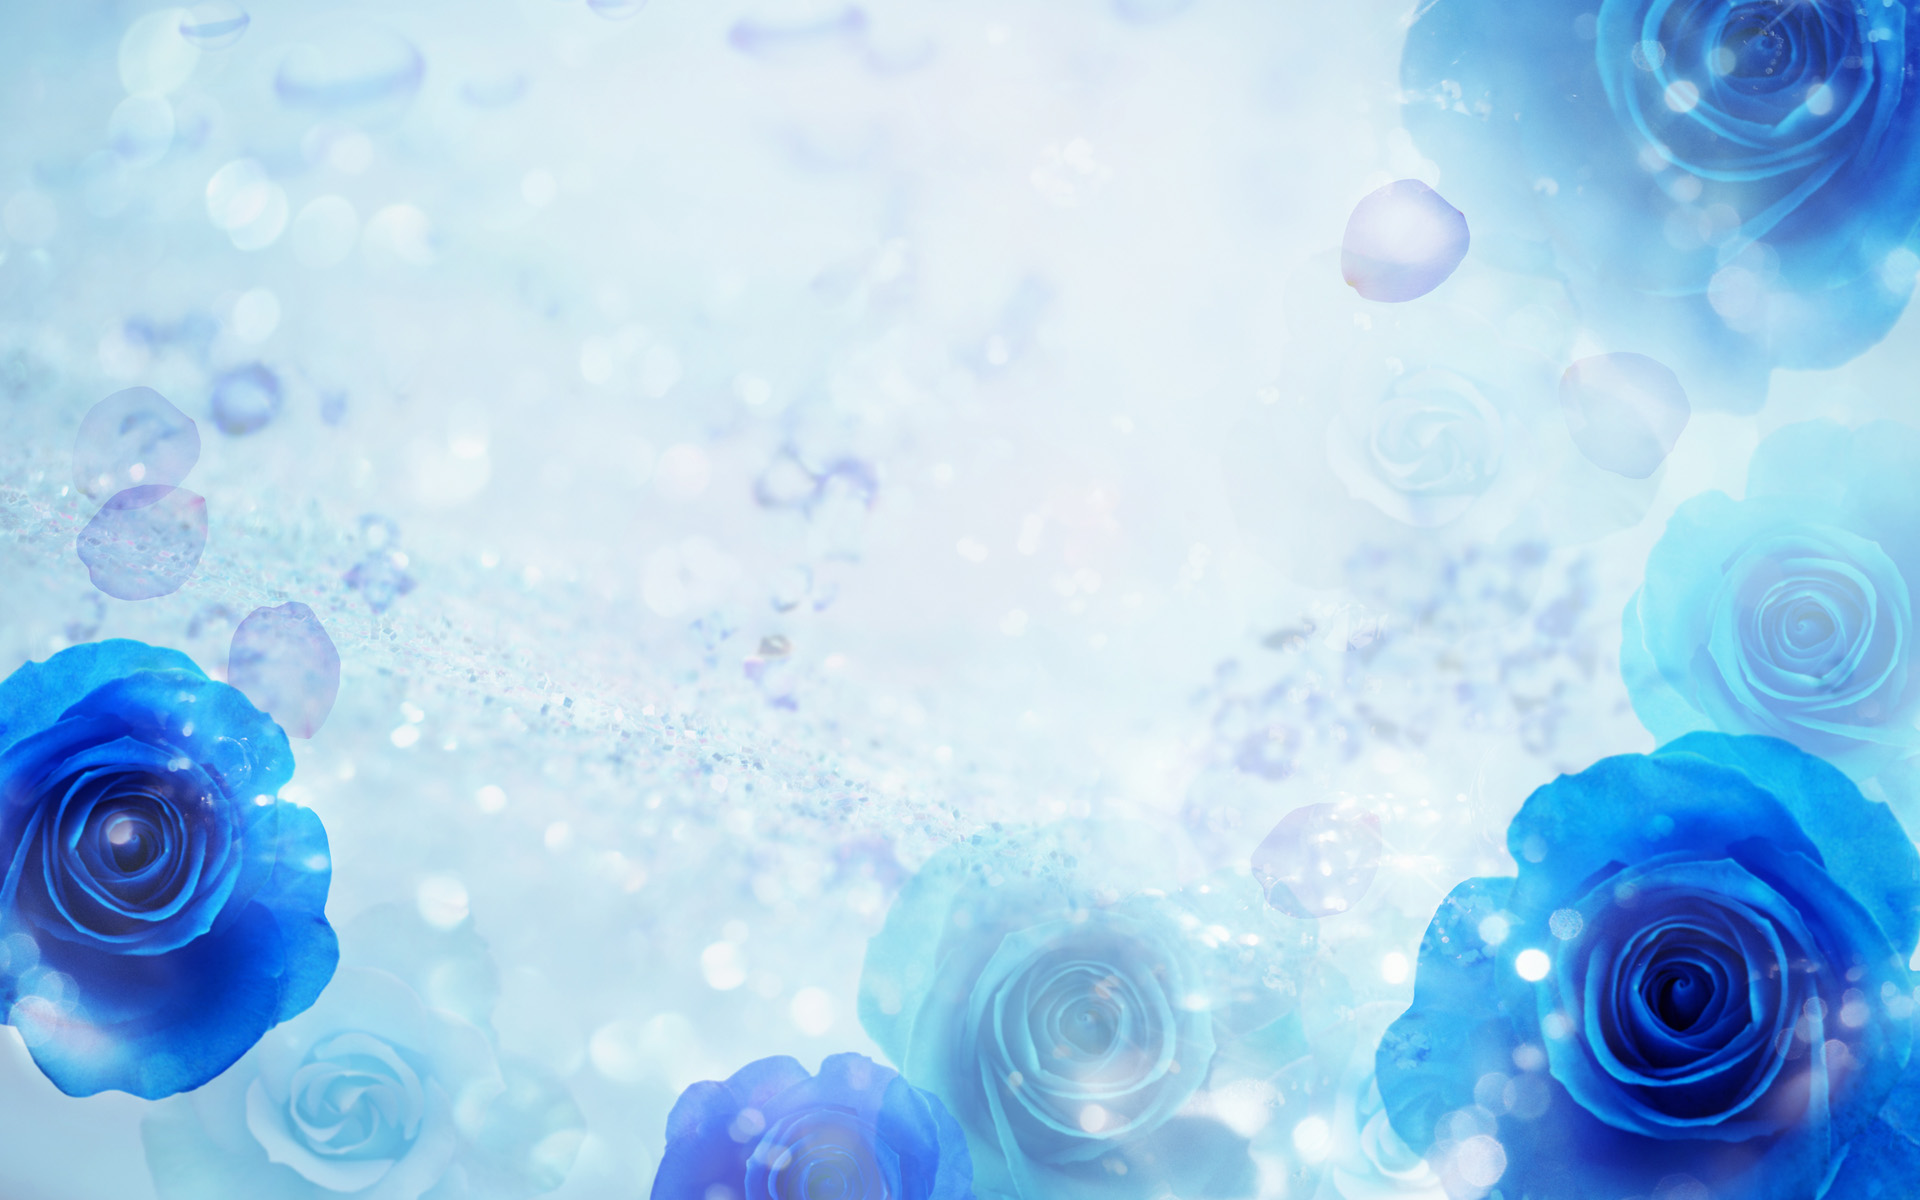 Beautiful Aquarium In Blue Colors 3D Wallpaper Image